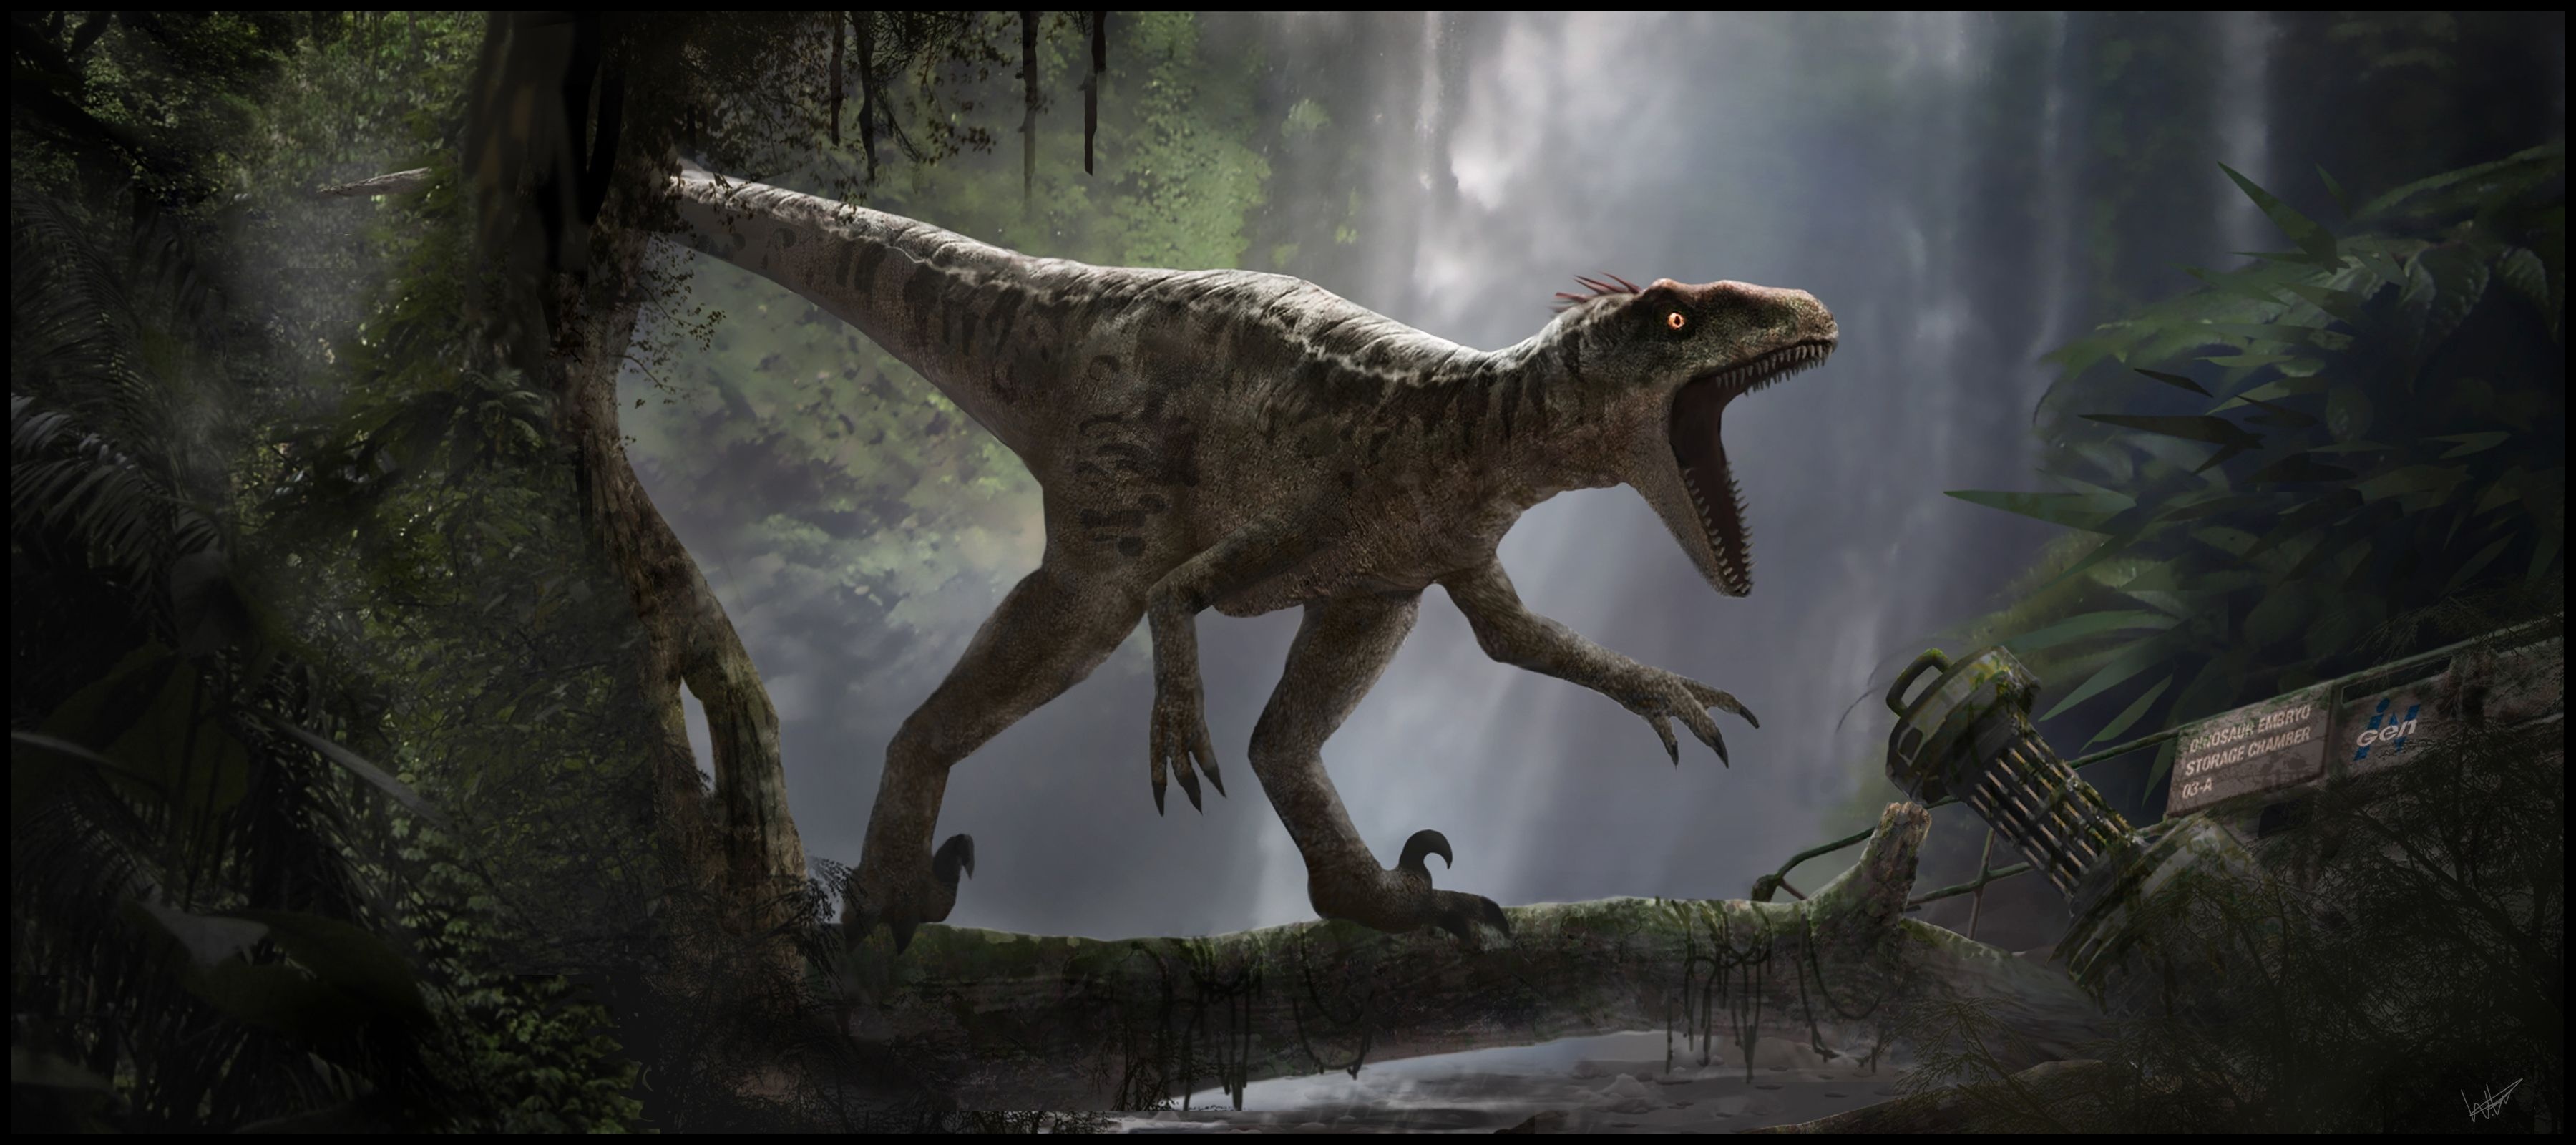 Velociraptor, Raptor wallpapers, 4K backgrounds, Dinosaur predators, 3600x1600 Dual Screen Desktop